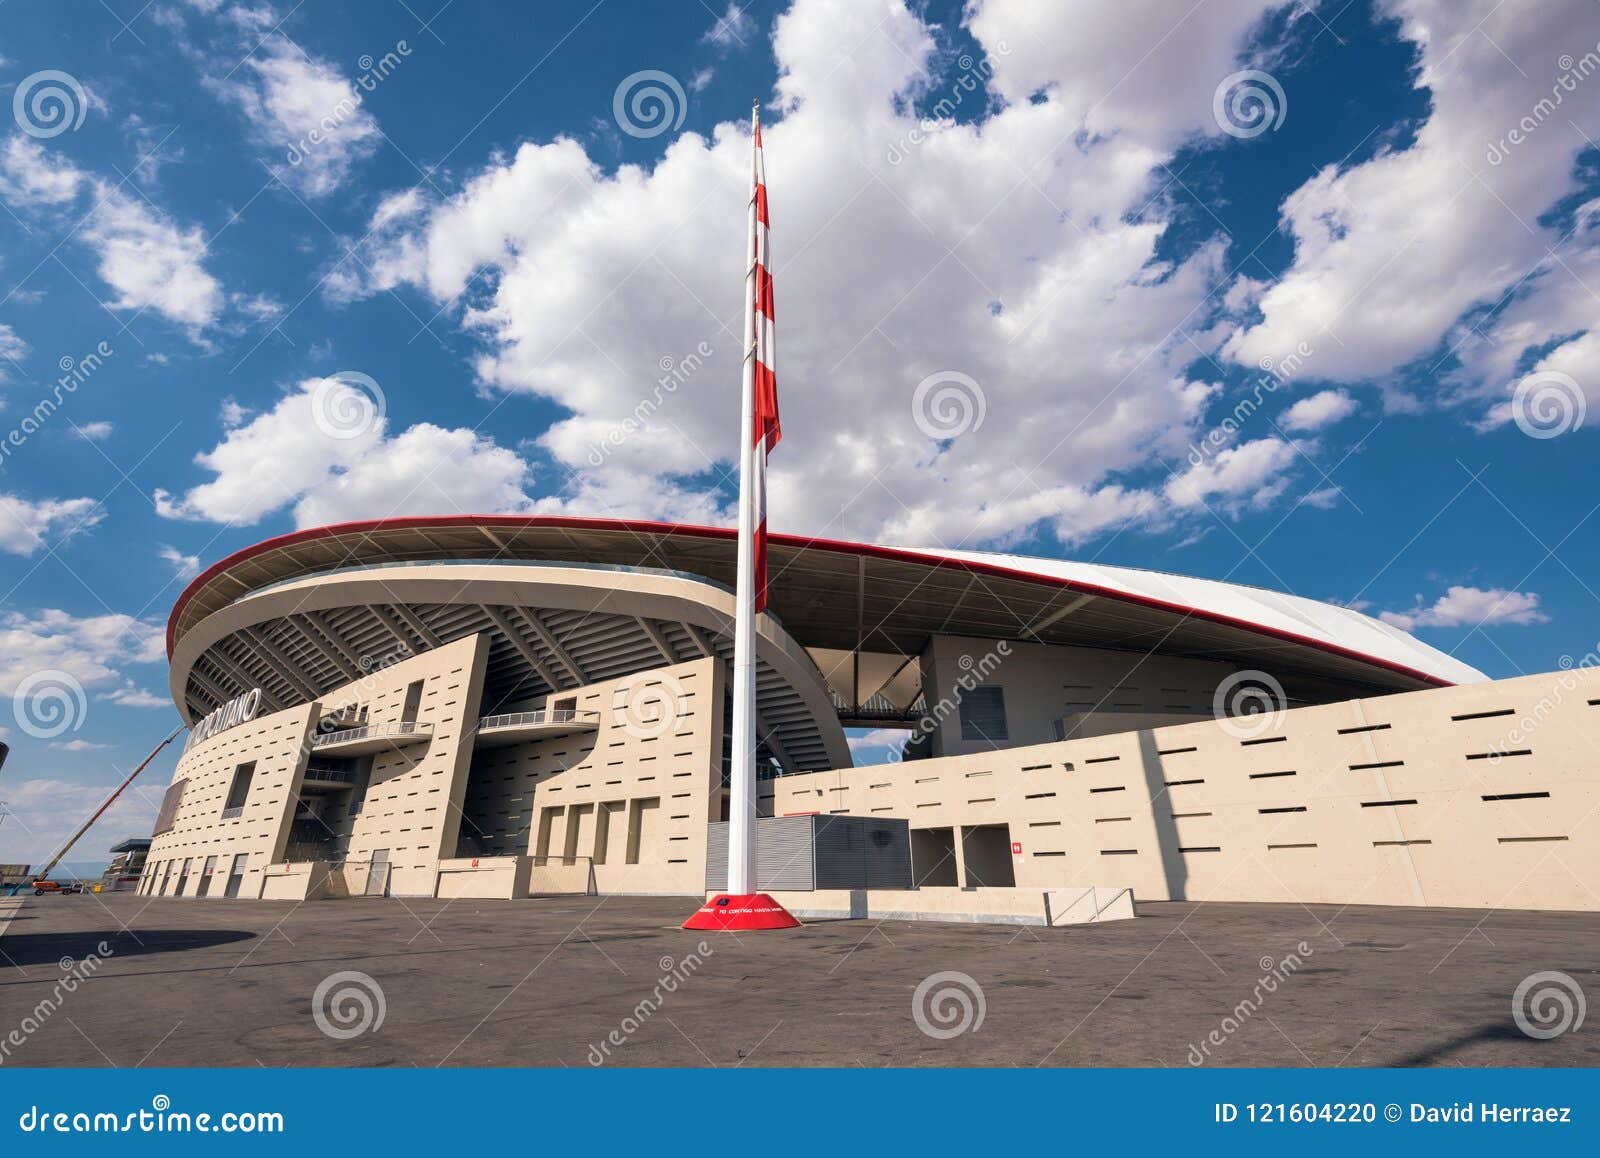 Wanda Metropolitano Stadium In Madrid Spain Wanda Metropolitano Is The New Stadium Of Atletico De Madrid Spanish Football Club Editorial Image Image Of Flag Construction